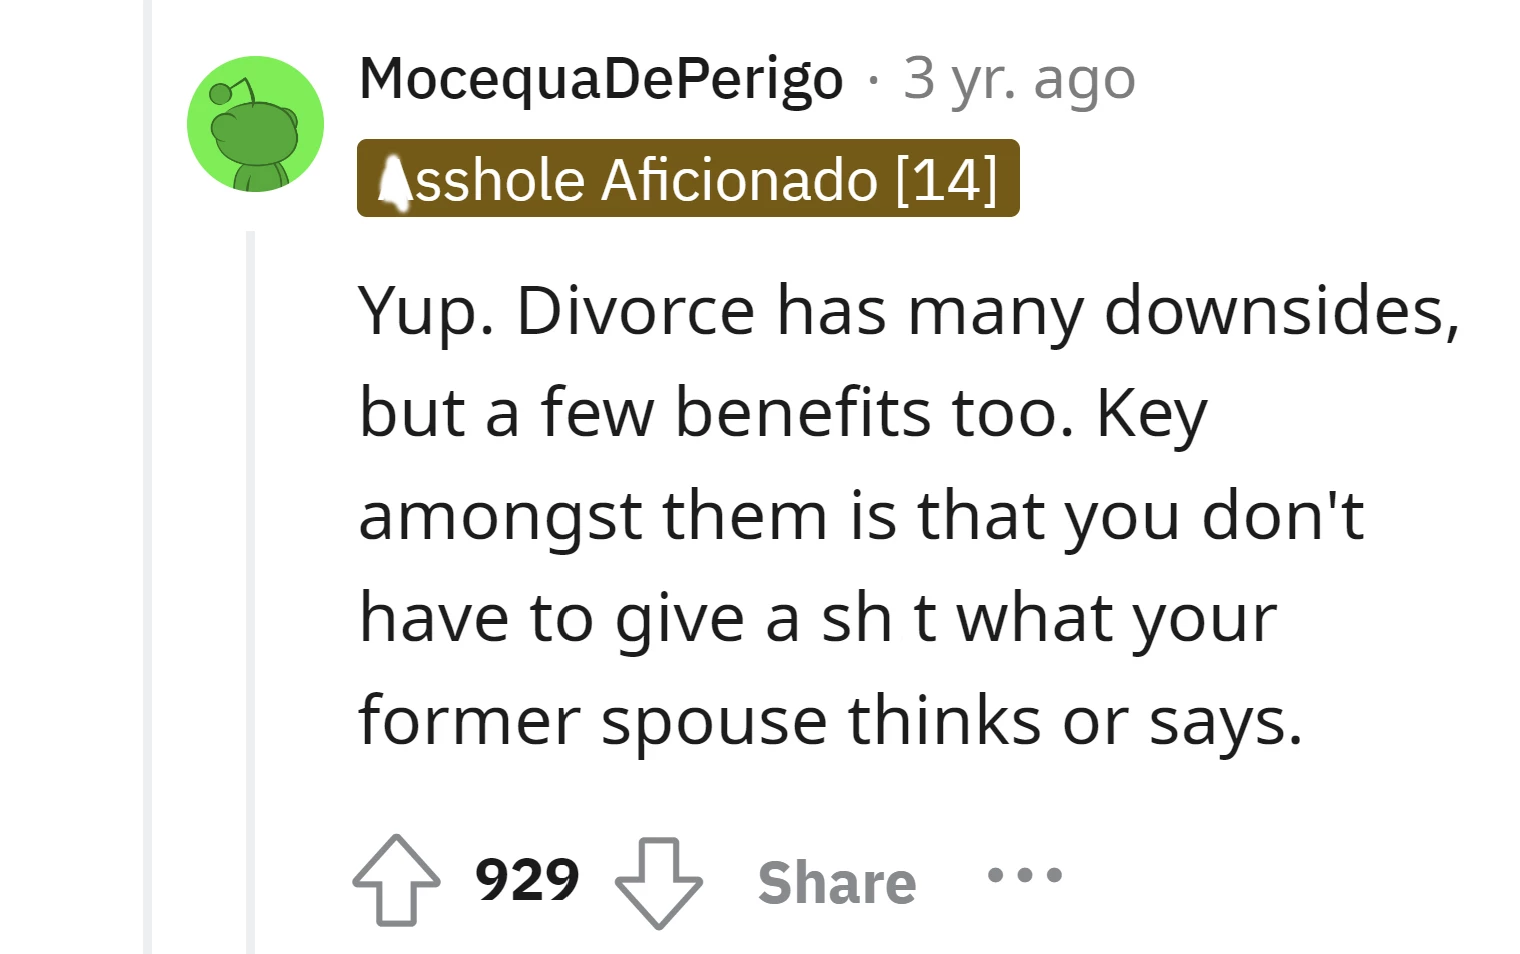 Take advantage of your divorce, OP